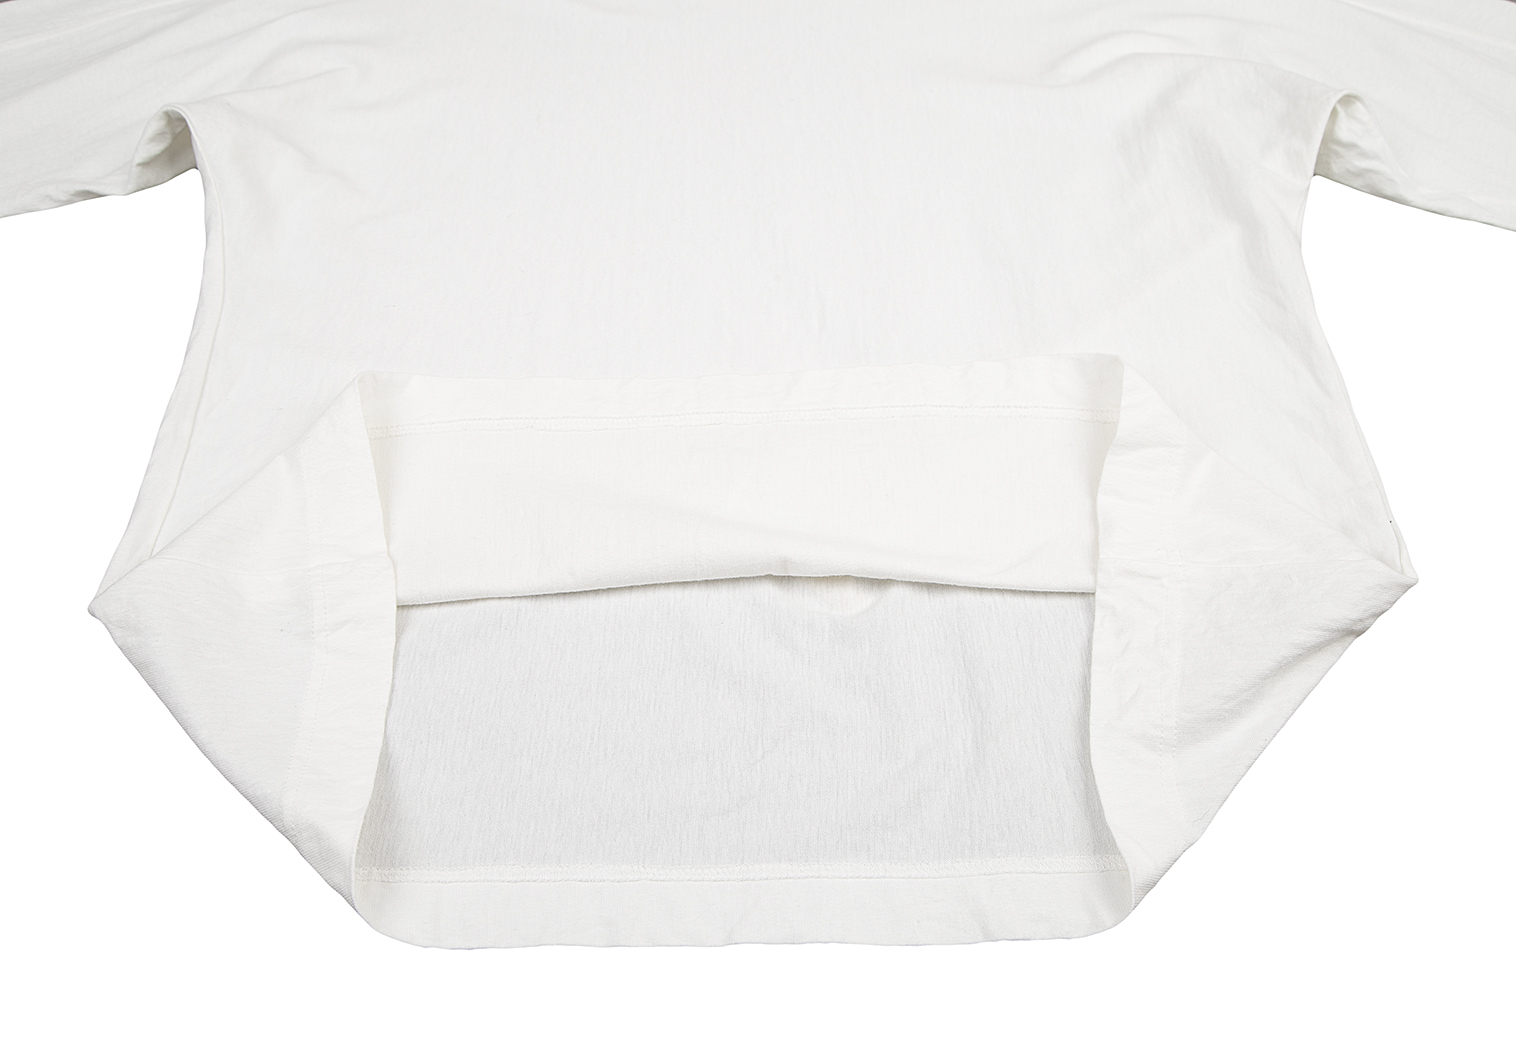 HOMME PLISSE オムプリッセ Tシャツ・カットソー 3(L位) 白